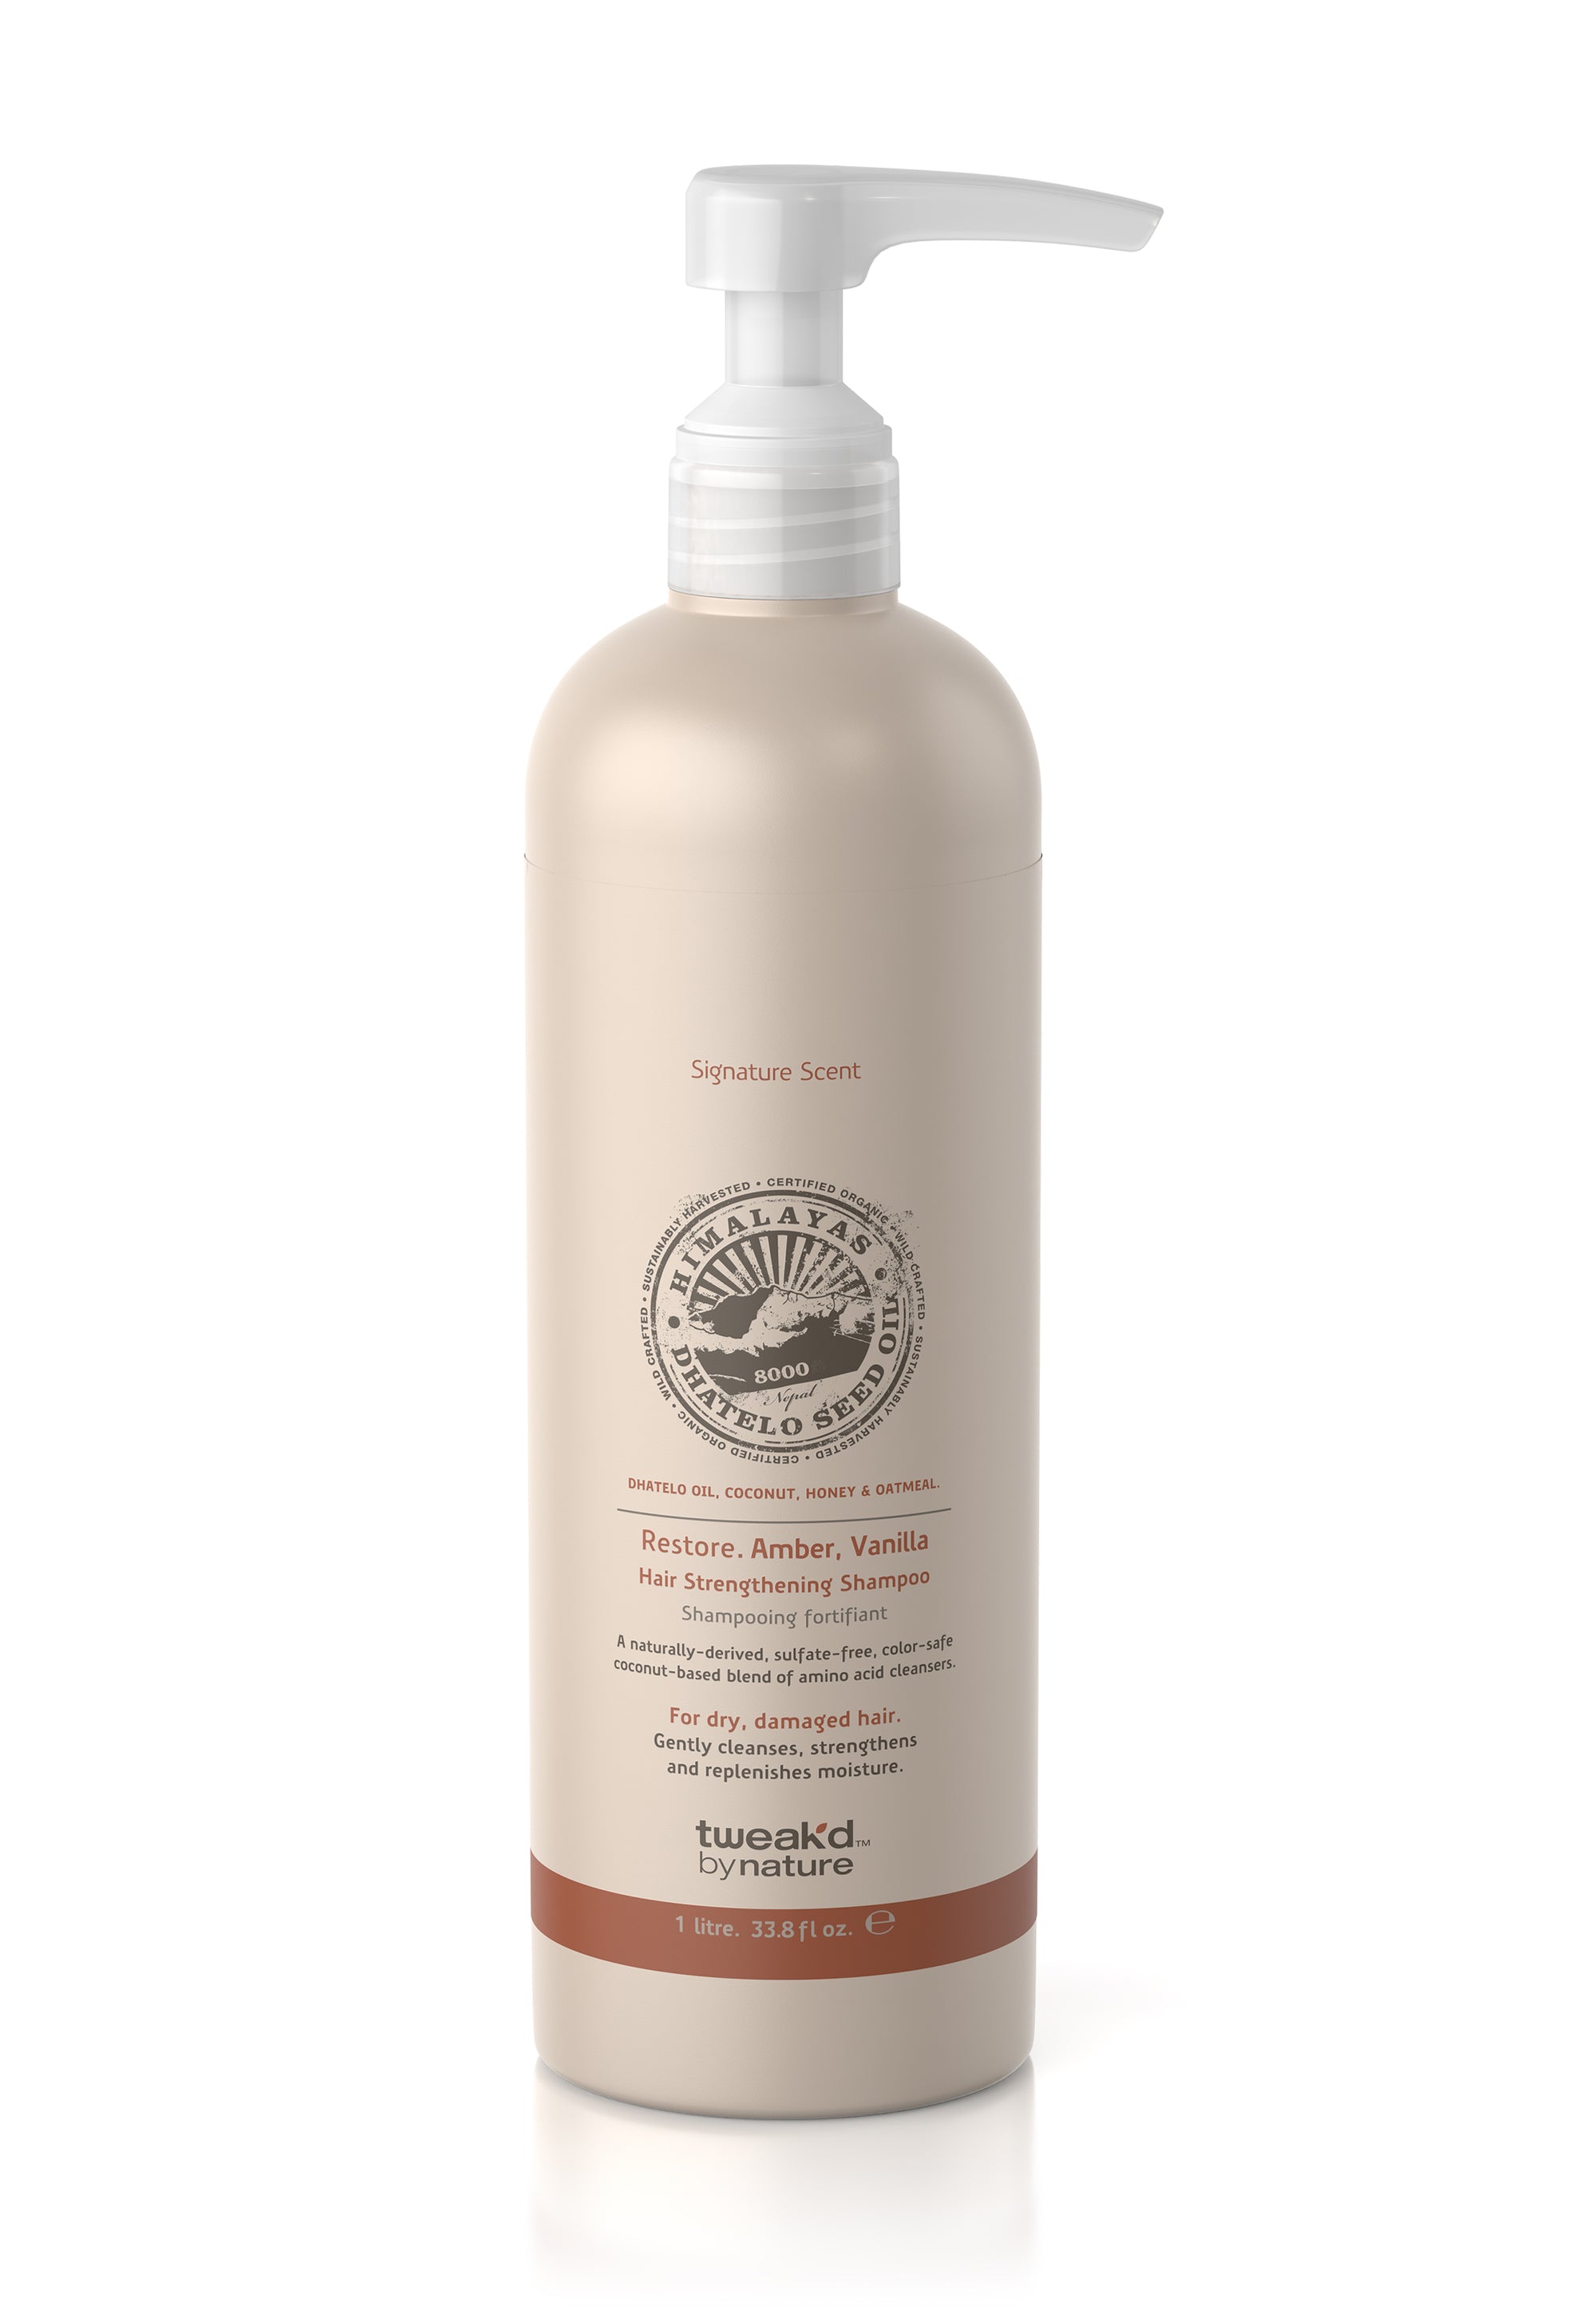 Tweak'd by Nature Dhatelo Restore Amber Vanilla Hair Strengthening Shampoo 1 Litre (33.8floz)